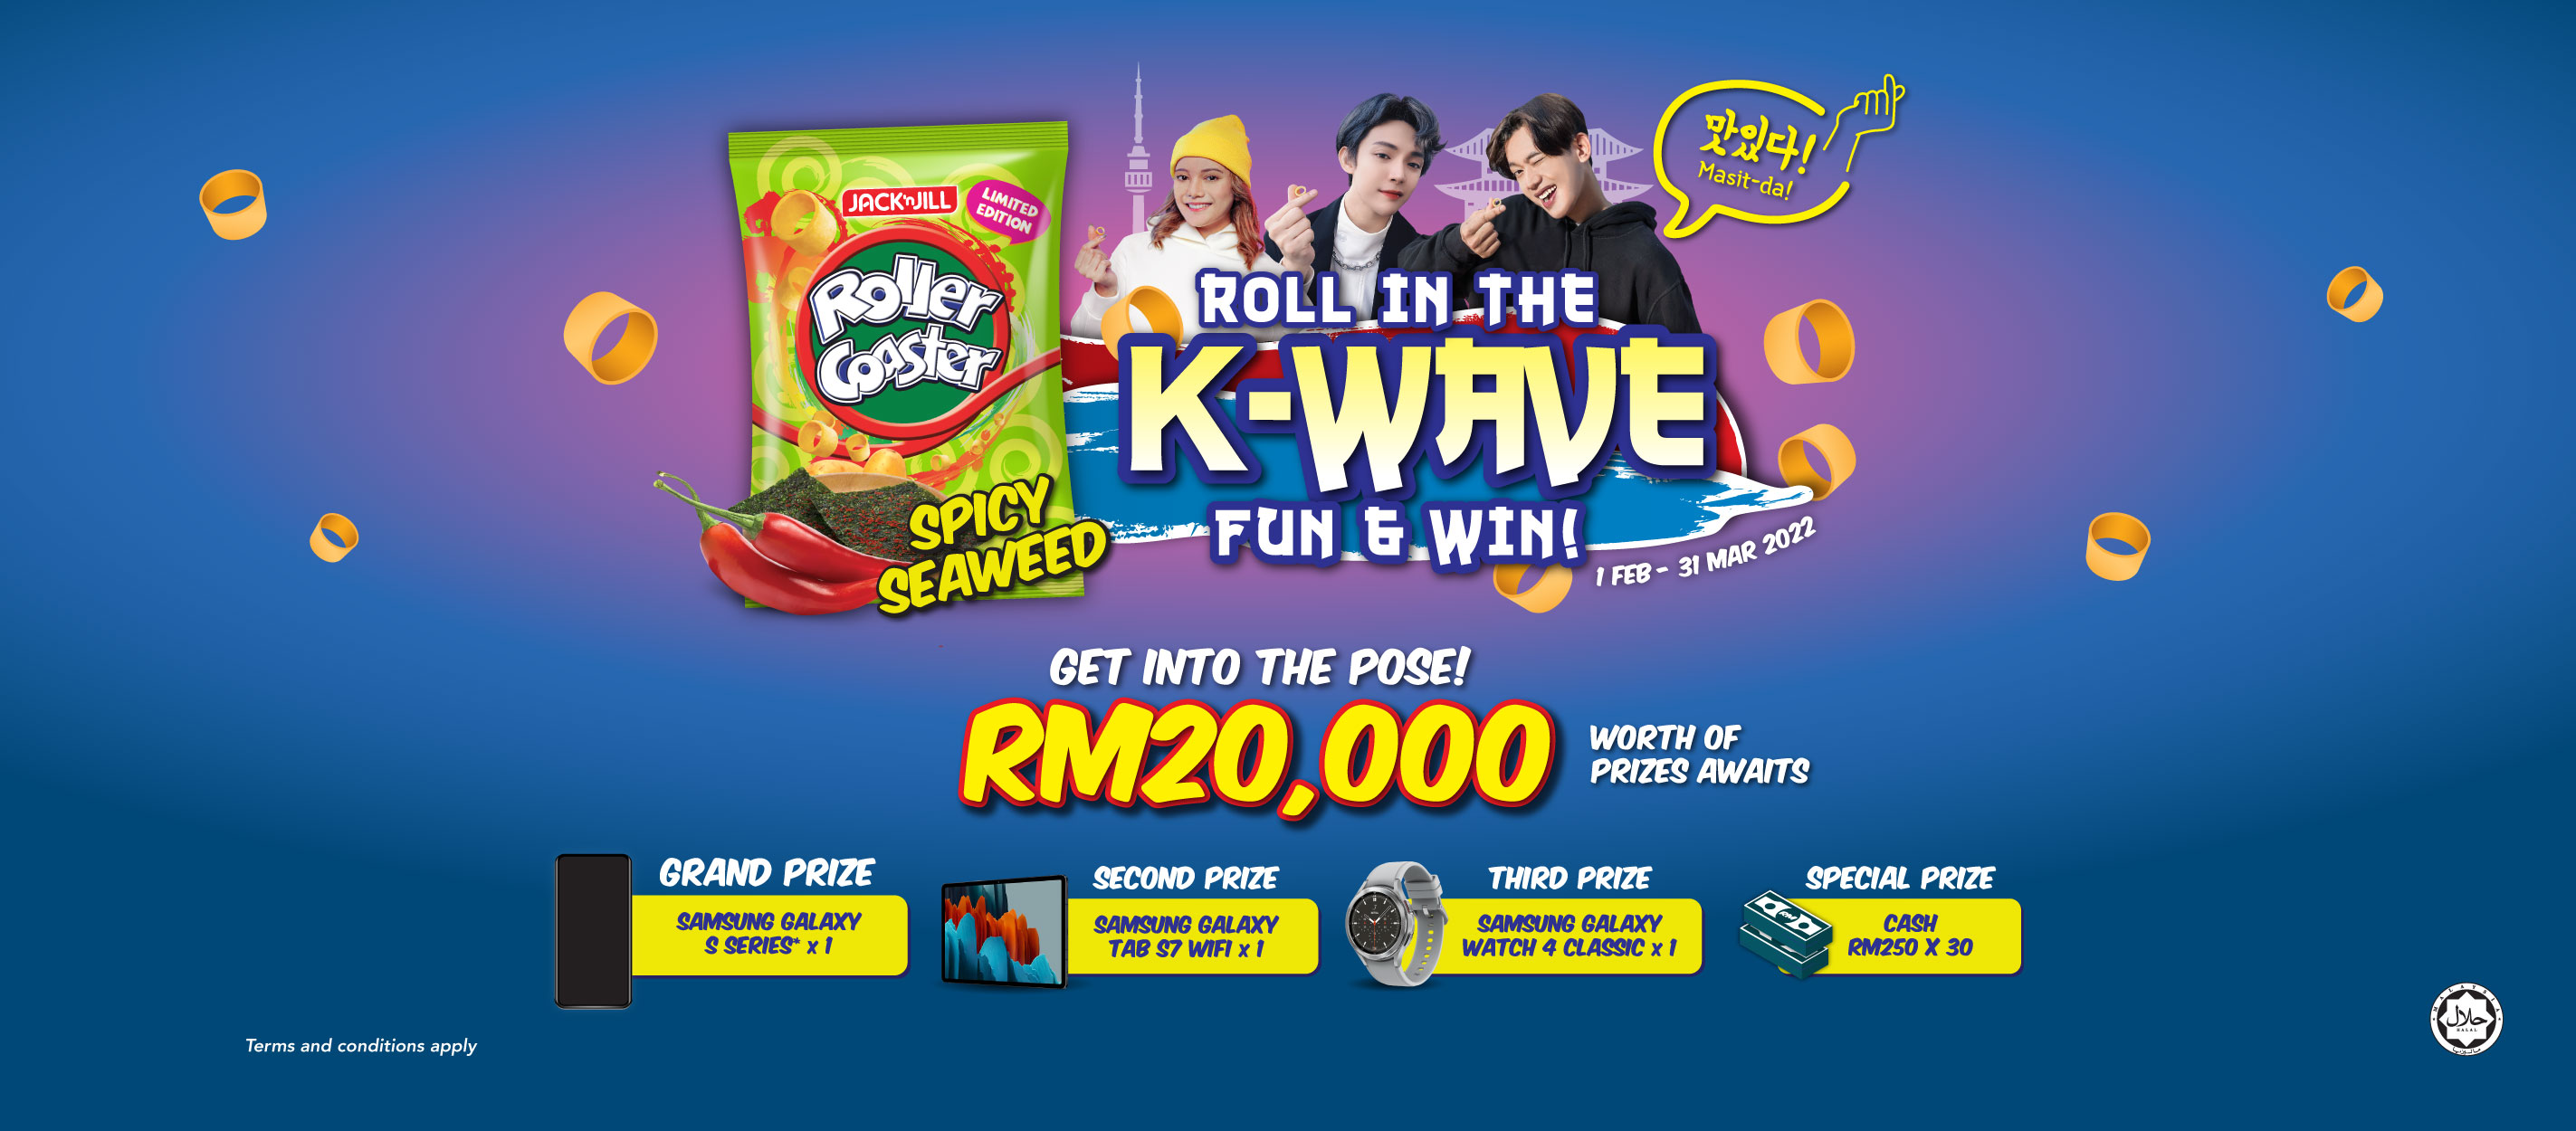 JACK ‘n JILL Roller Coaster Roll In The K-Wave Fun & Win! Contest